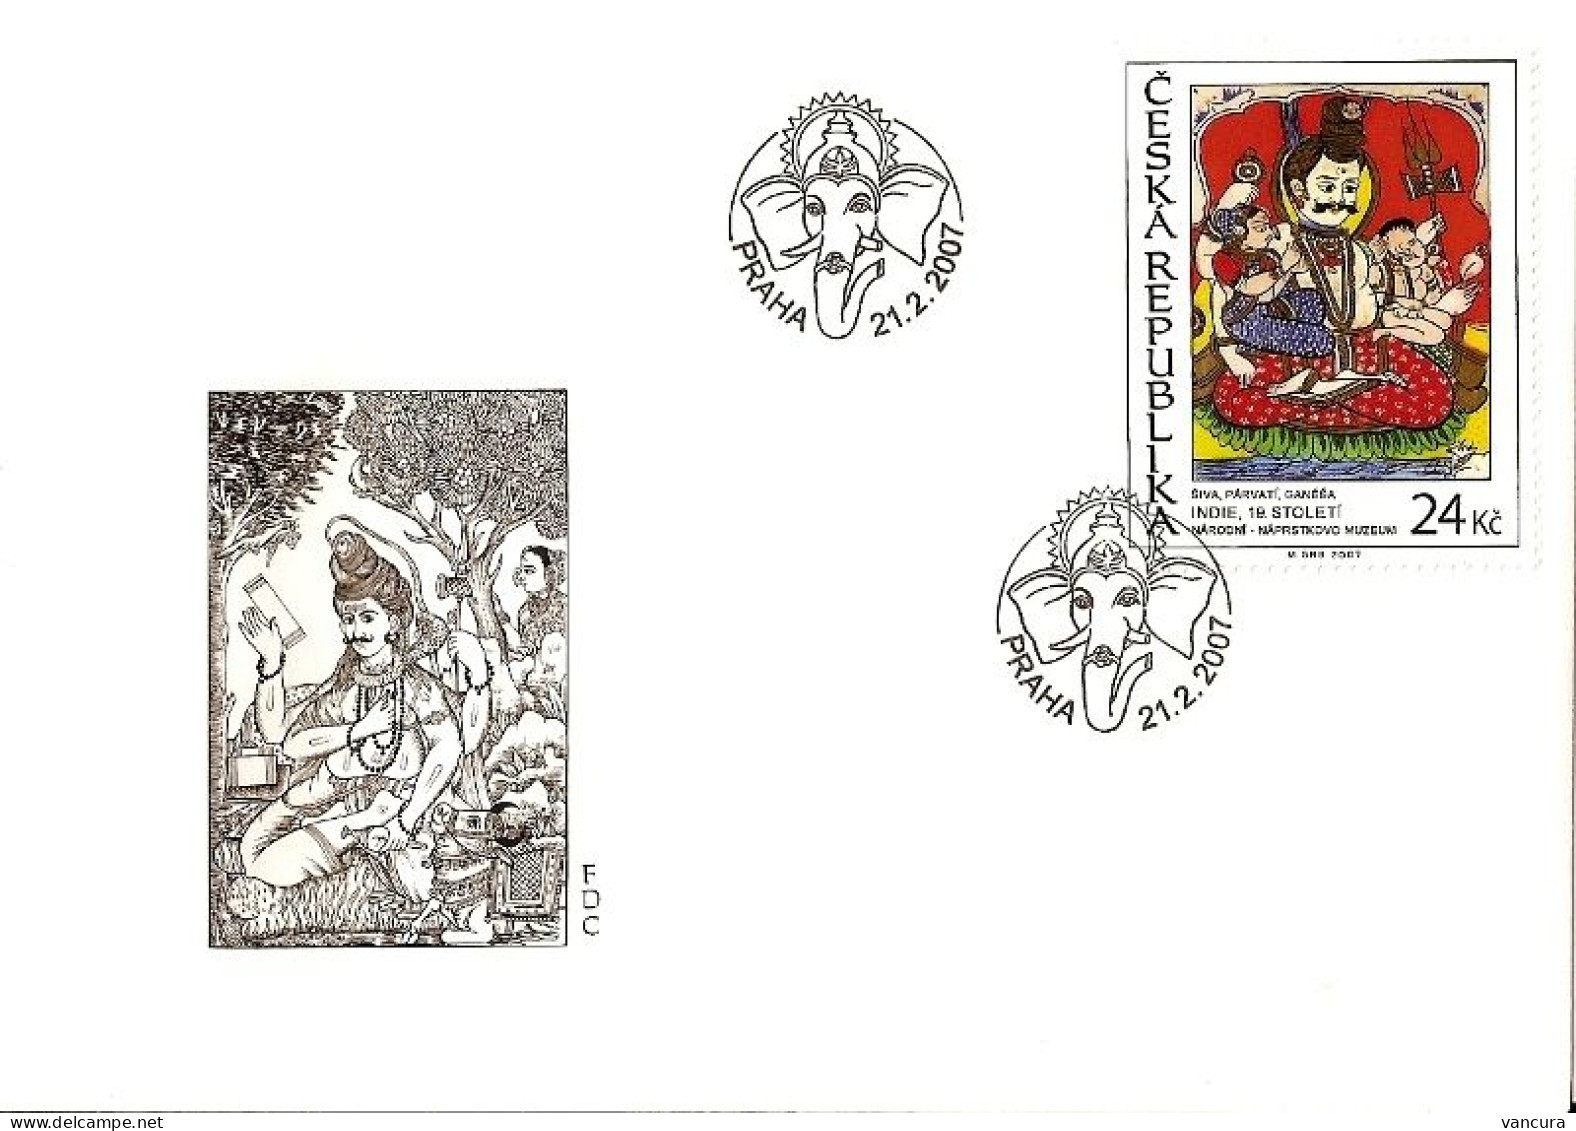 FDC 504 Czech Republic ORIENTAL ART FROM OF INDIA 2007 Shiva Parvati Ganesha - Mythology